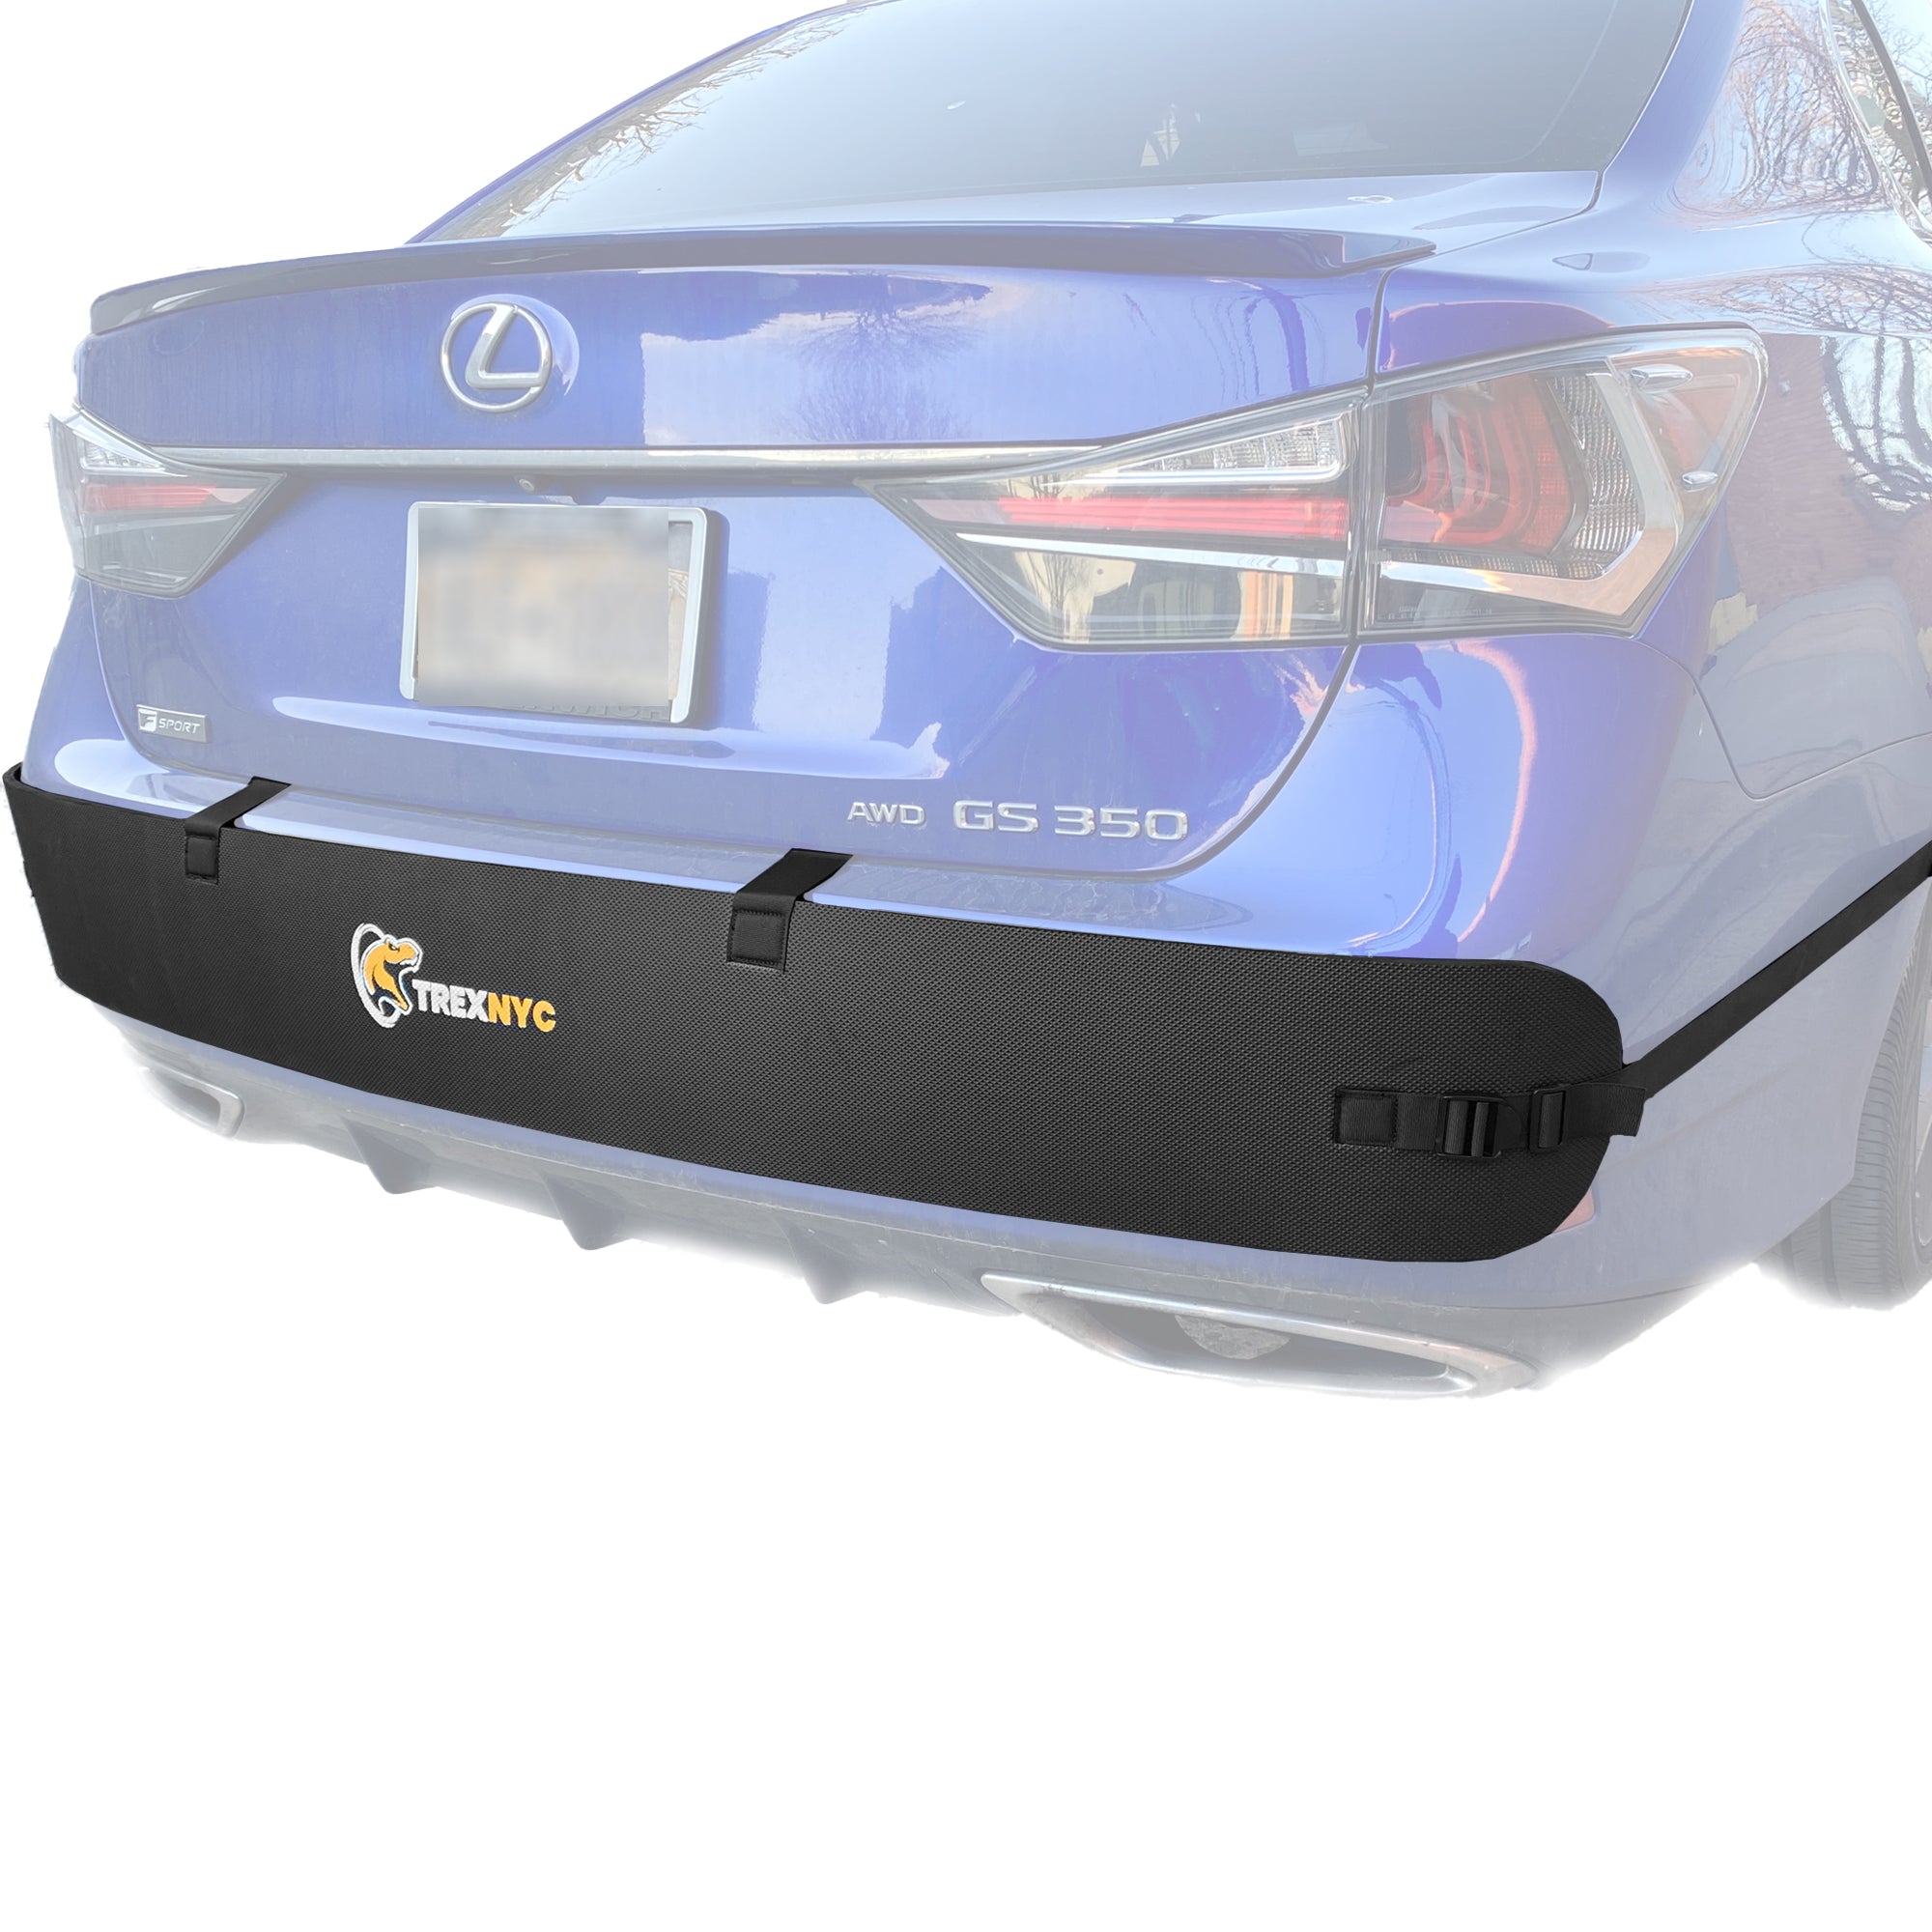  CLT Car Headlight Restoration Kit, Headlight Restorer Wipes (4)  : Automotive